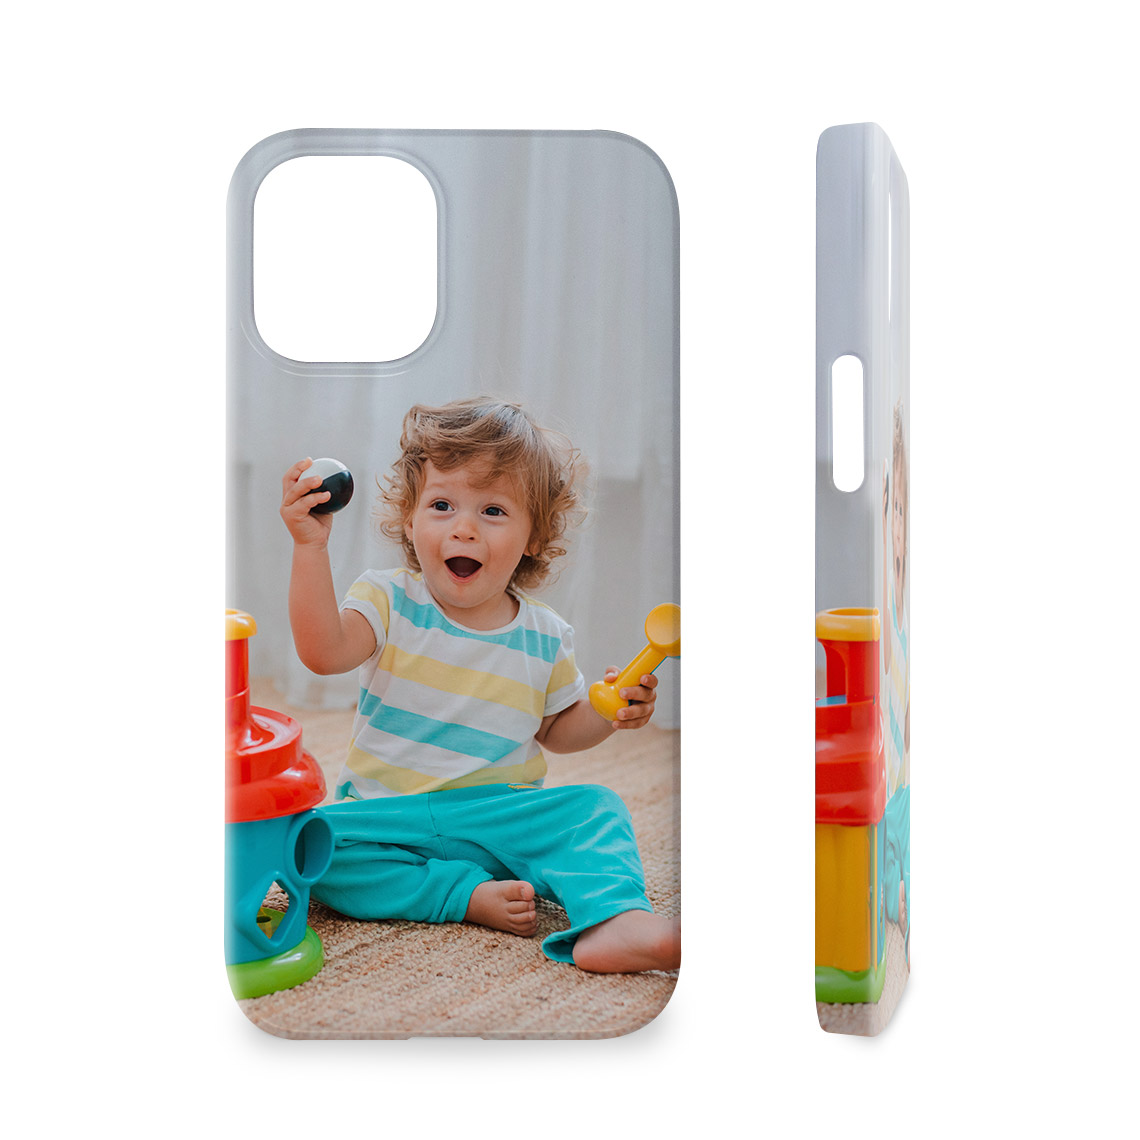 iPhone 12 Mini Cases & Covers